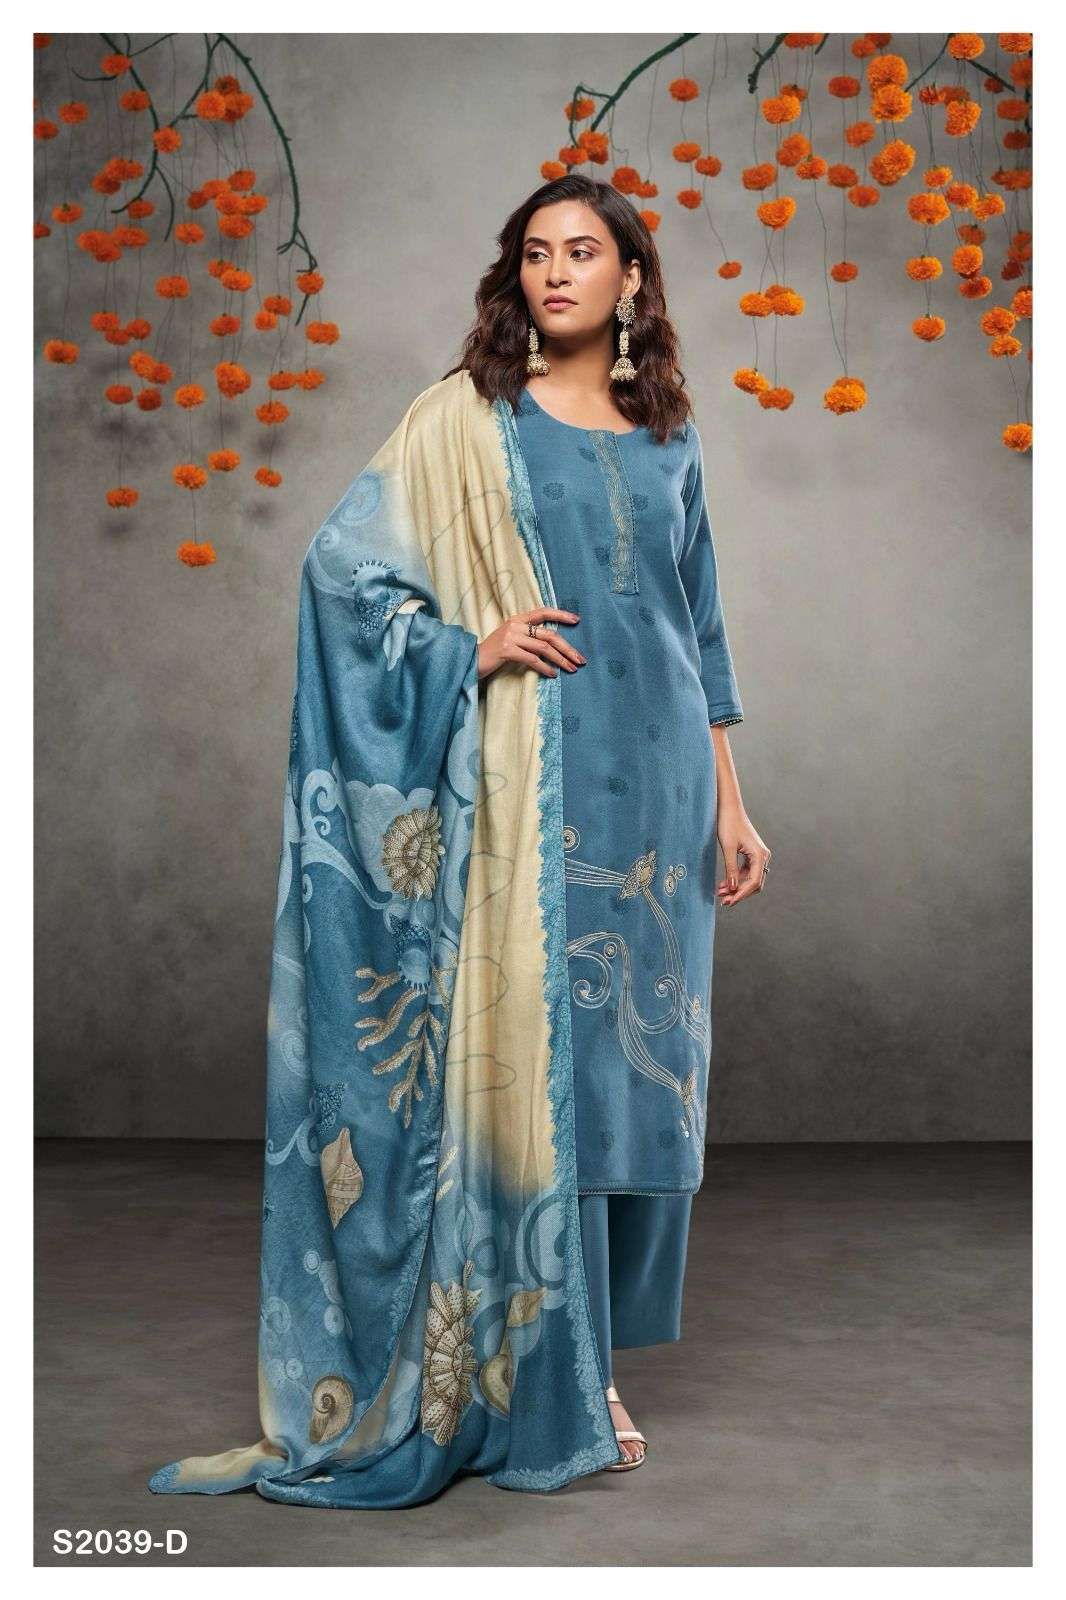 ganga dimity 2039 colour series latest designer straight cut salwar kameez wholesaler india